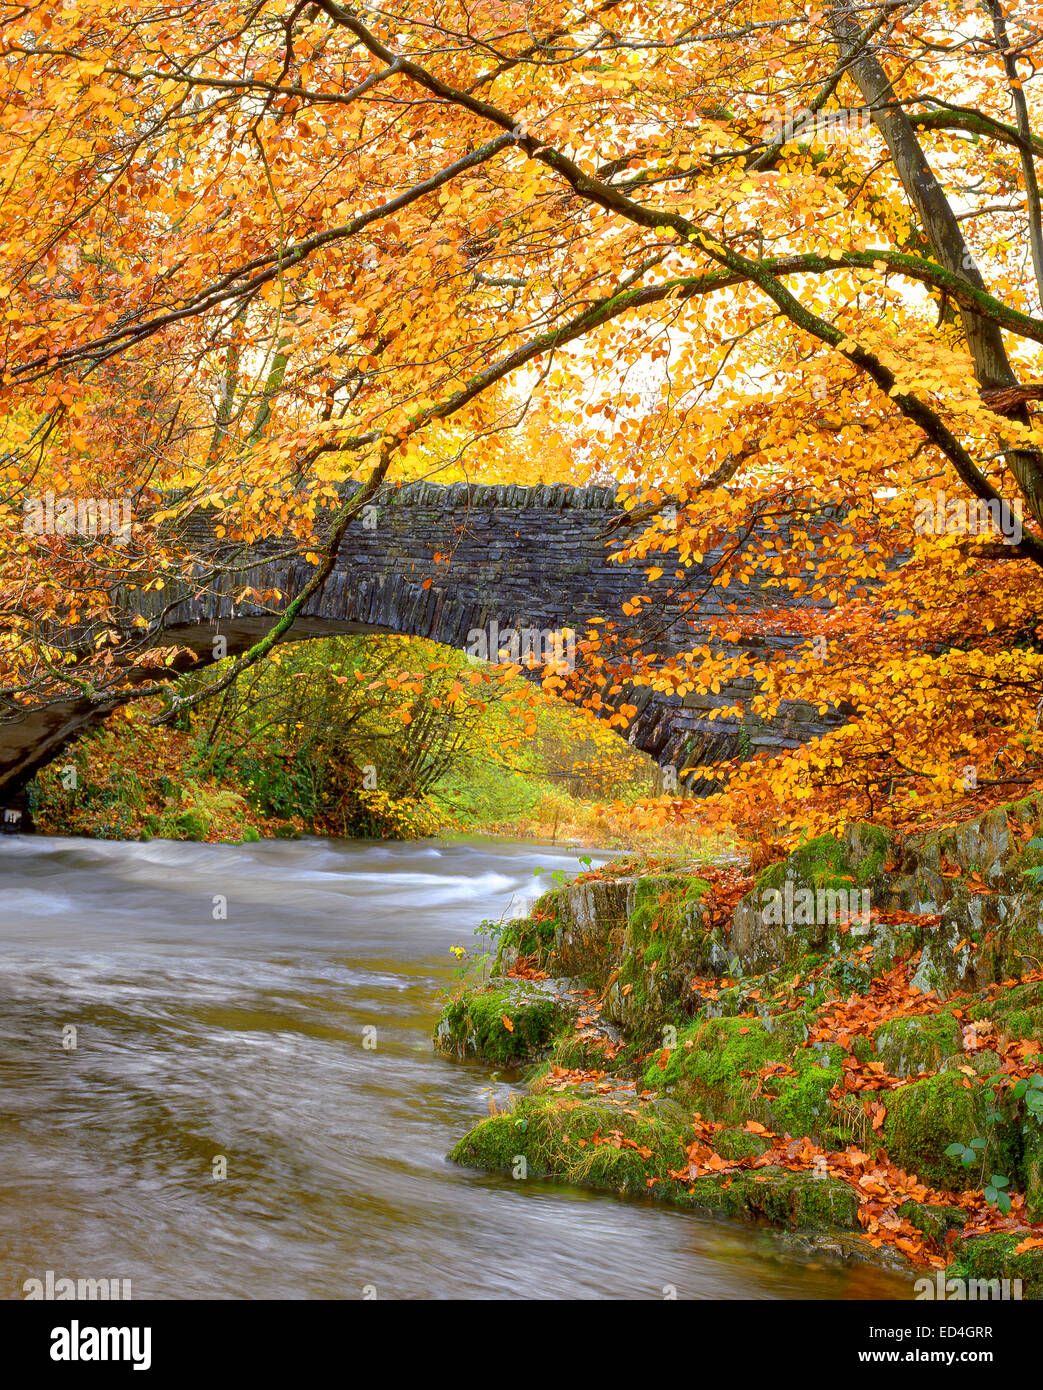 England: River Brathay, Clappersgate, Cumbria Stock Photo